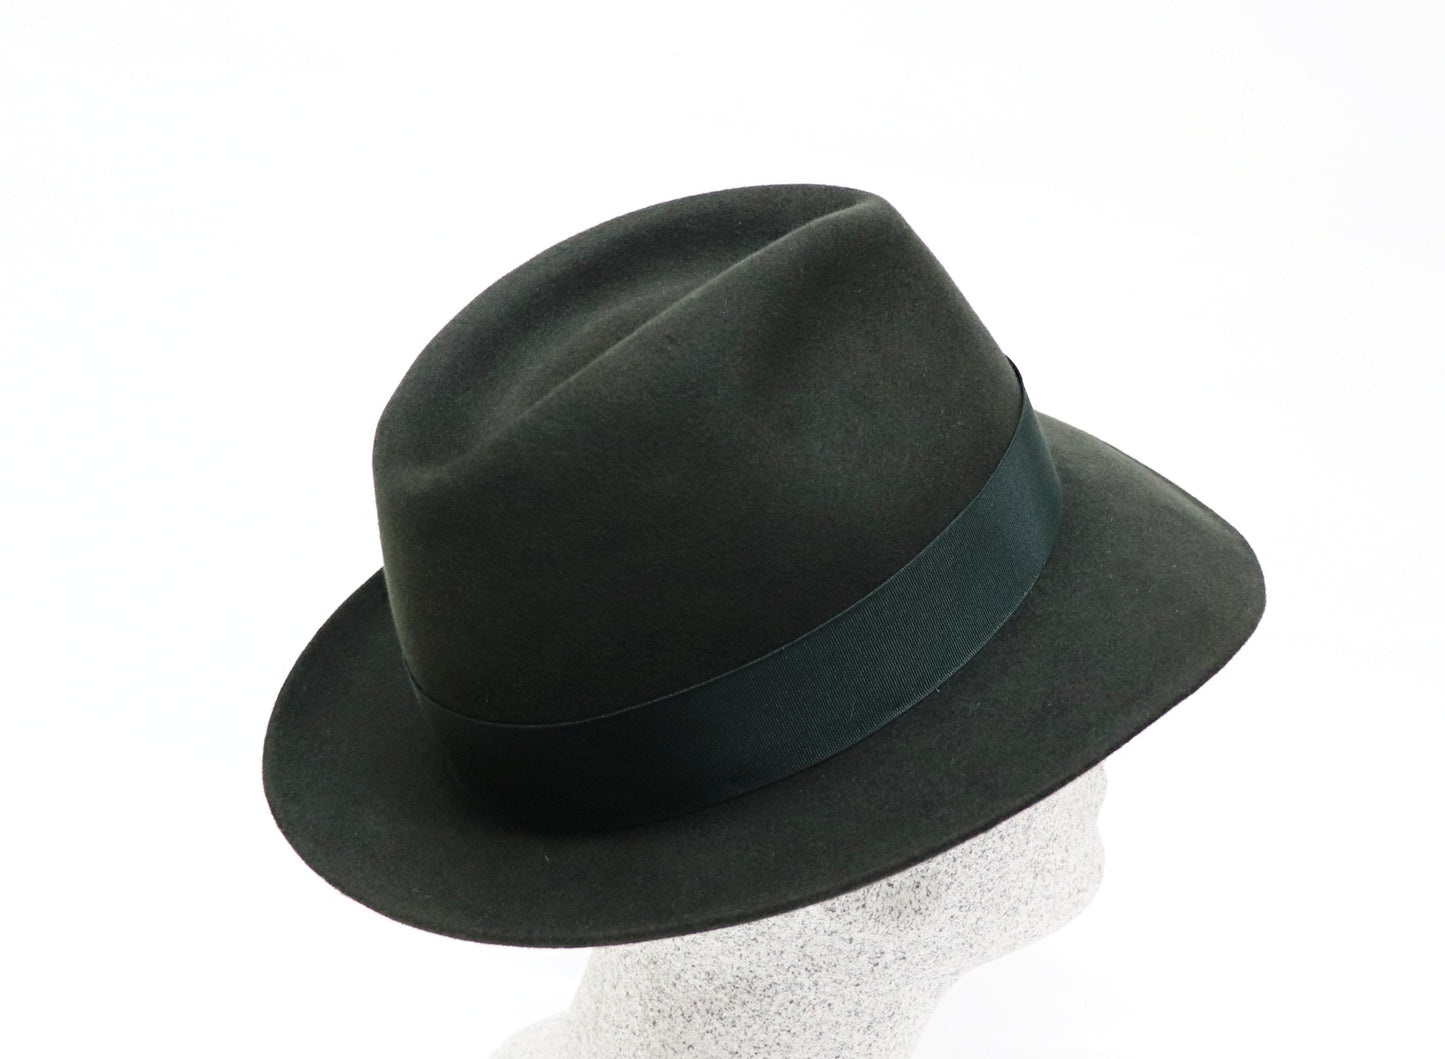 Fir green hunting hat